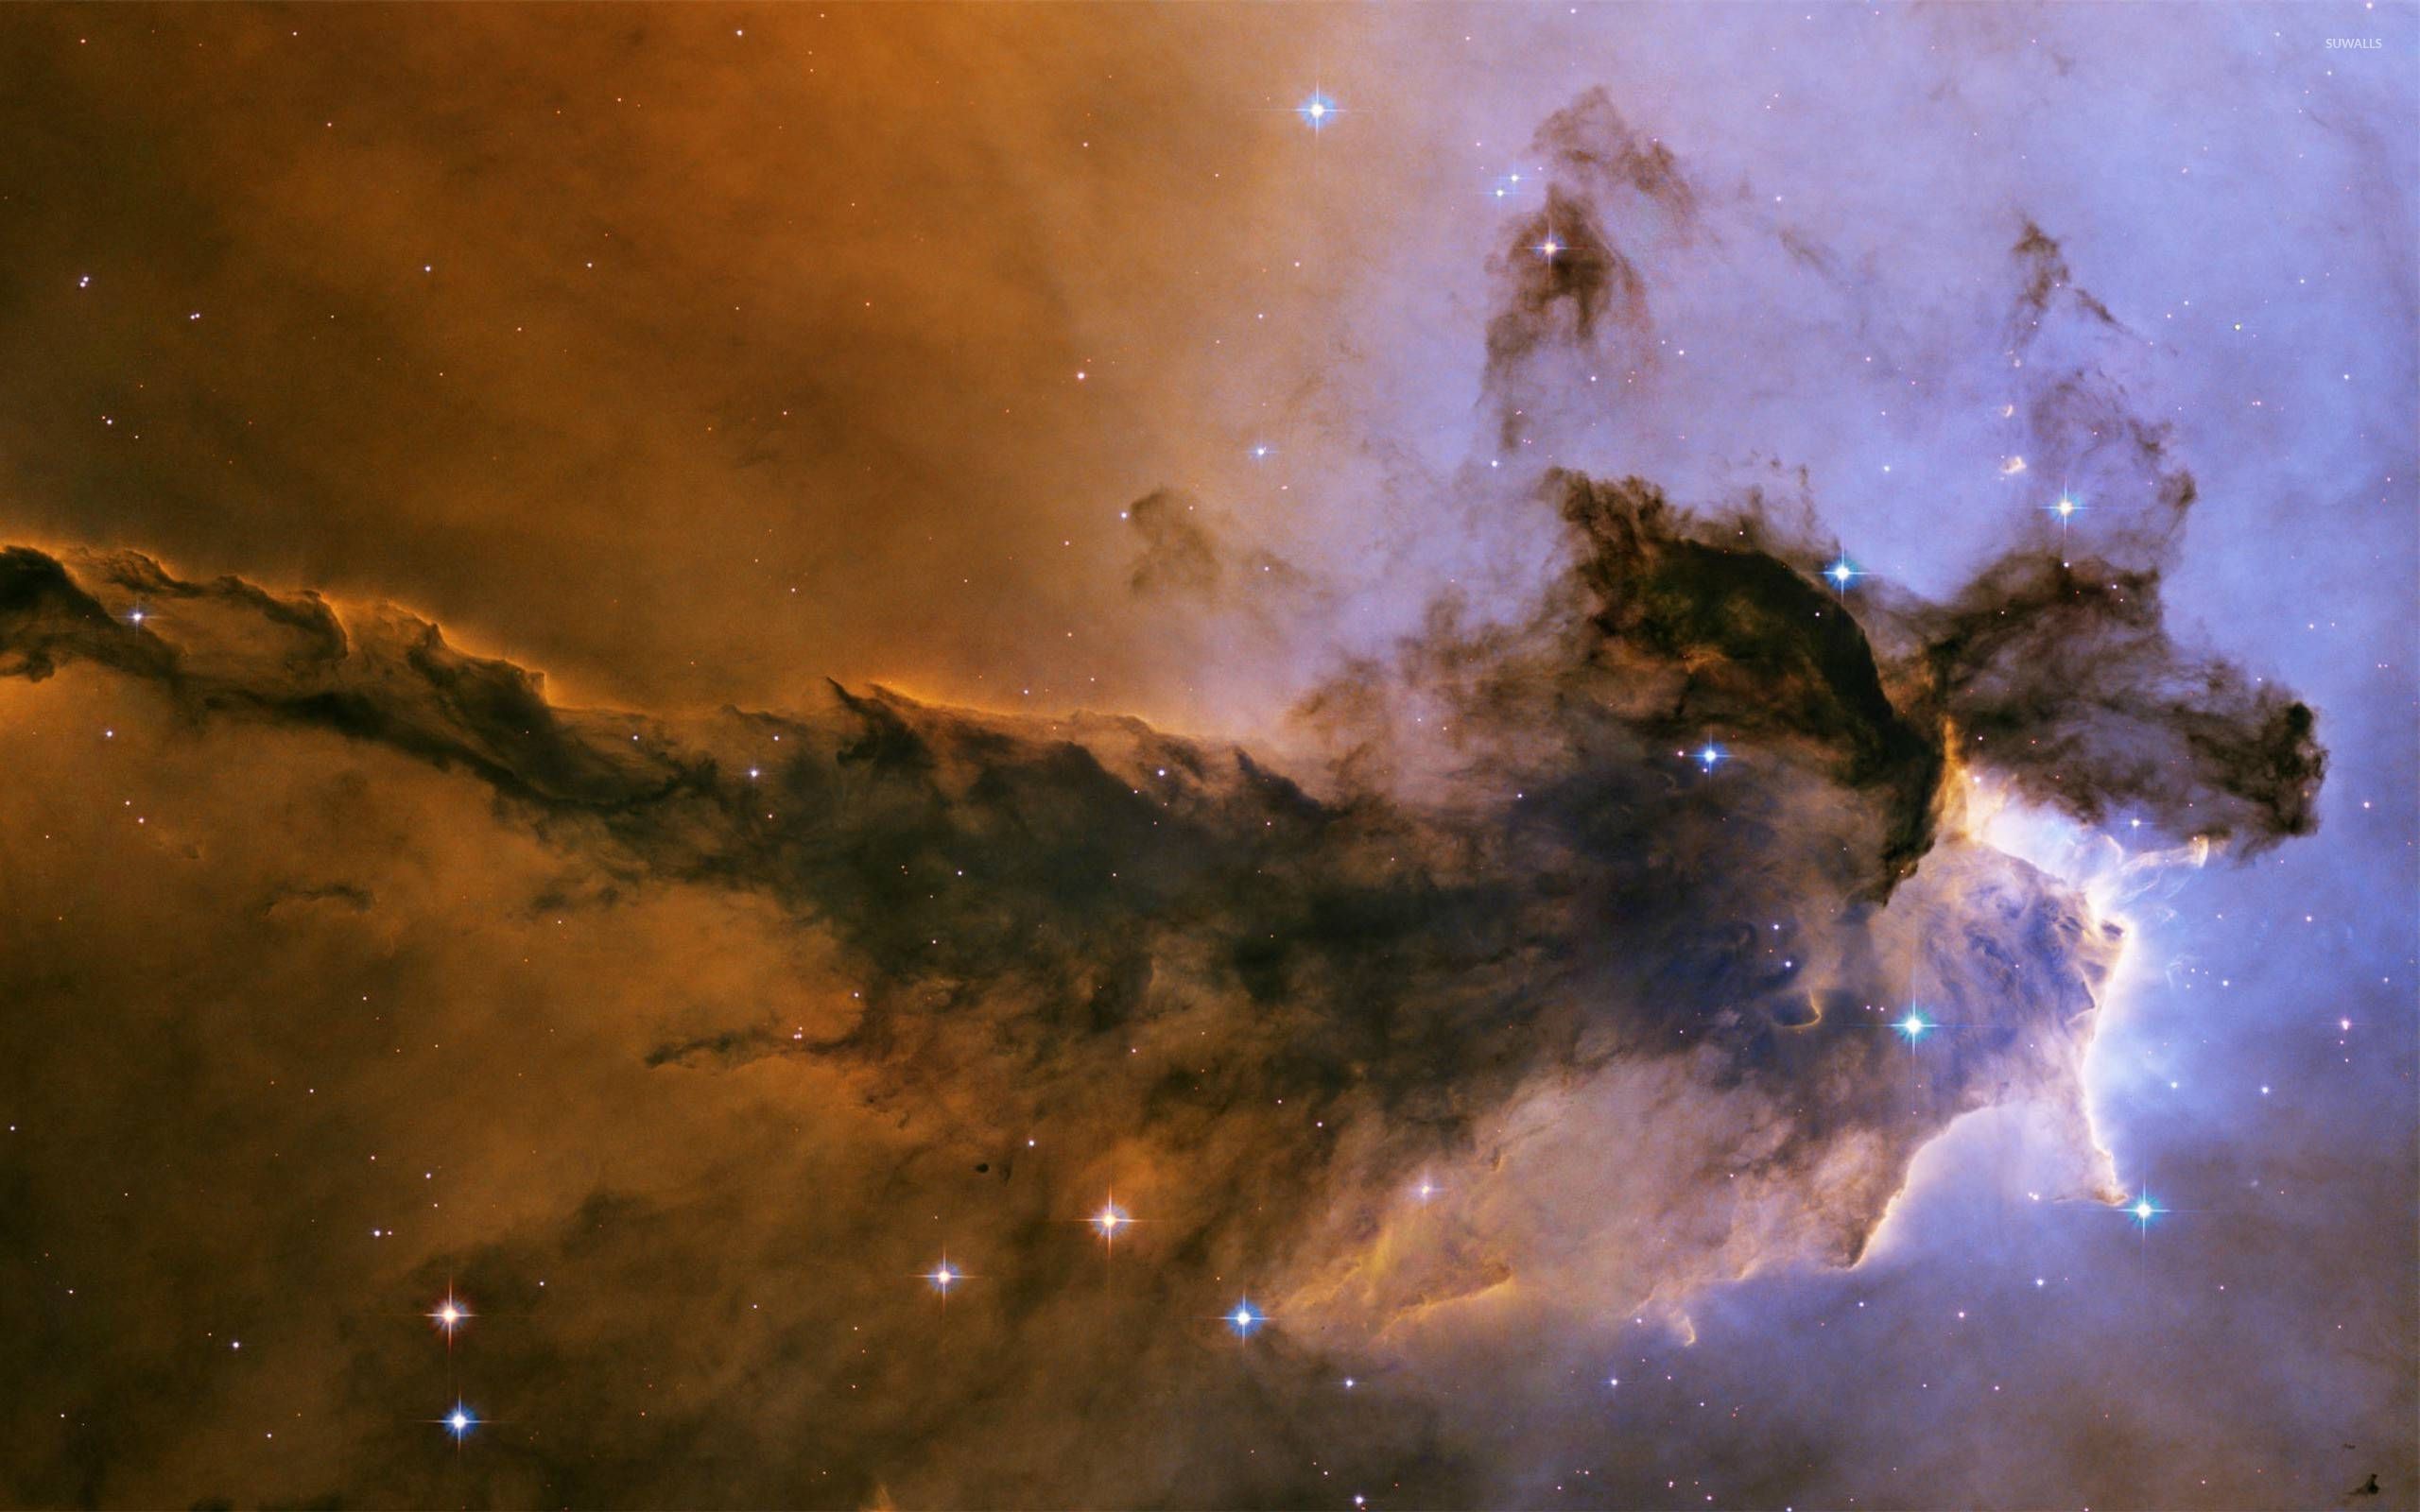 2560x1600 Eagle nebula wallpaper